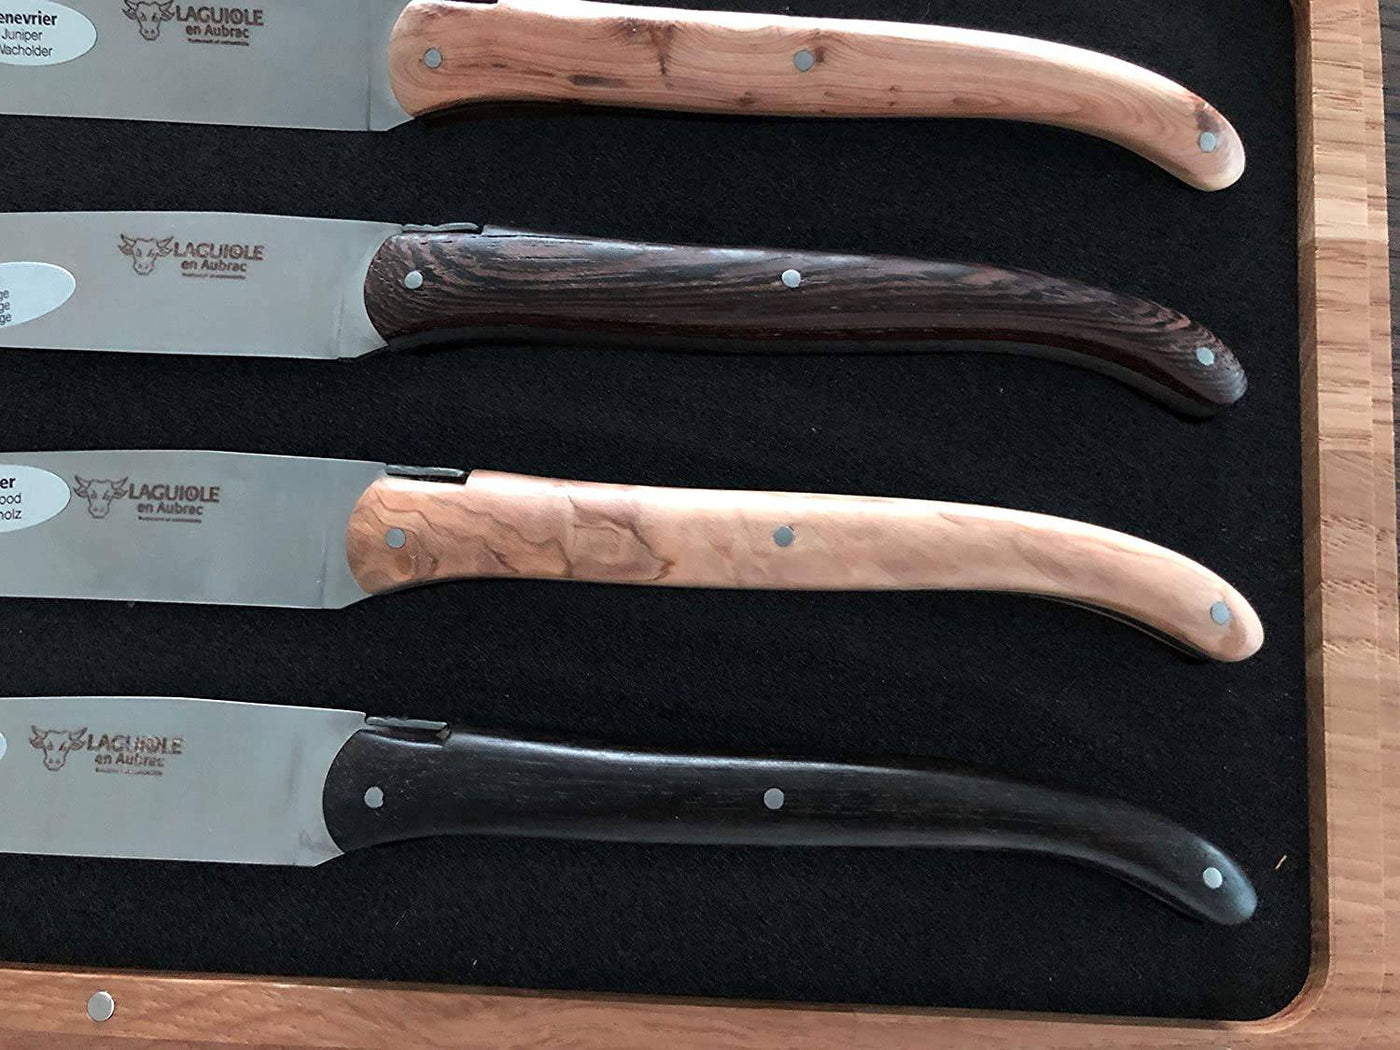 Laguiole en Aubrac Luxury Stainless Steel 4-Piece Steak Knife Set With Mixed Wood Handles - Kitchen Universe